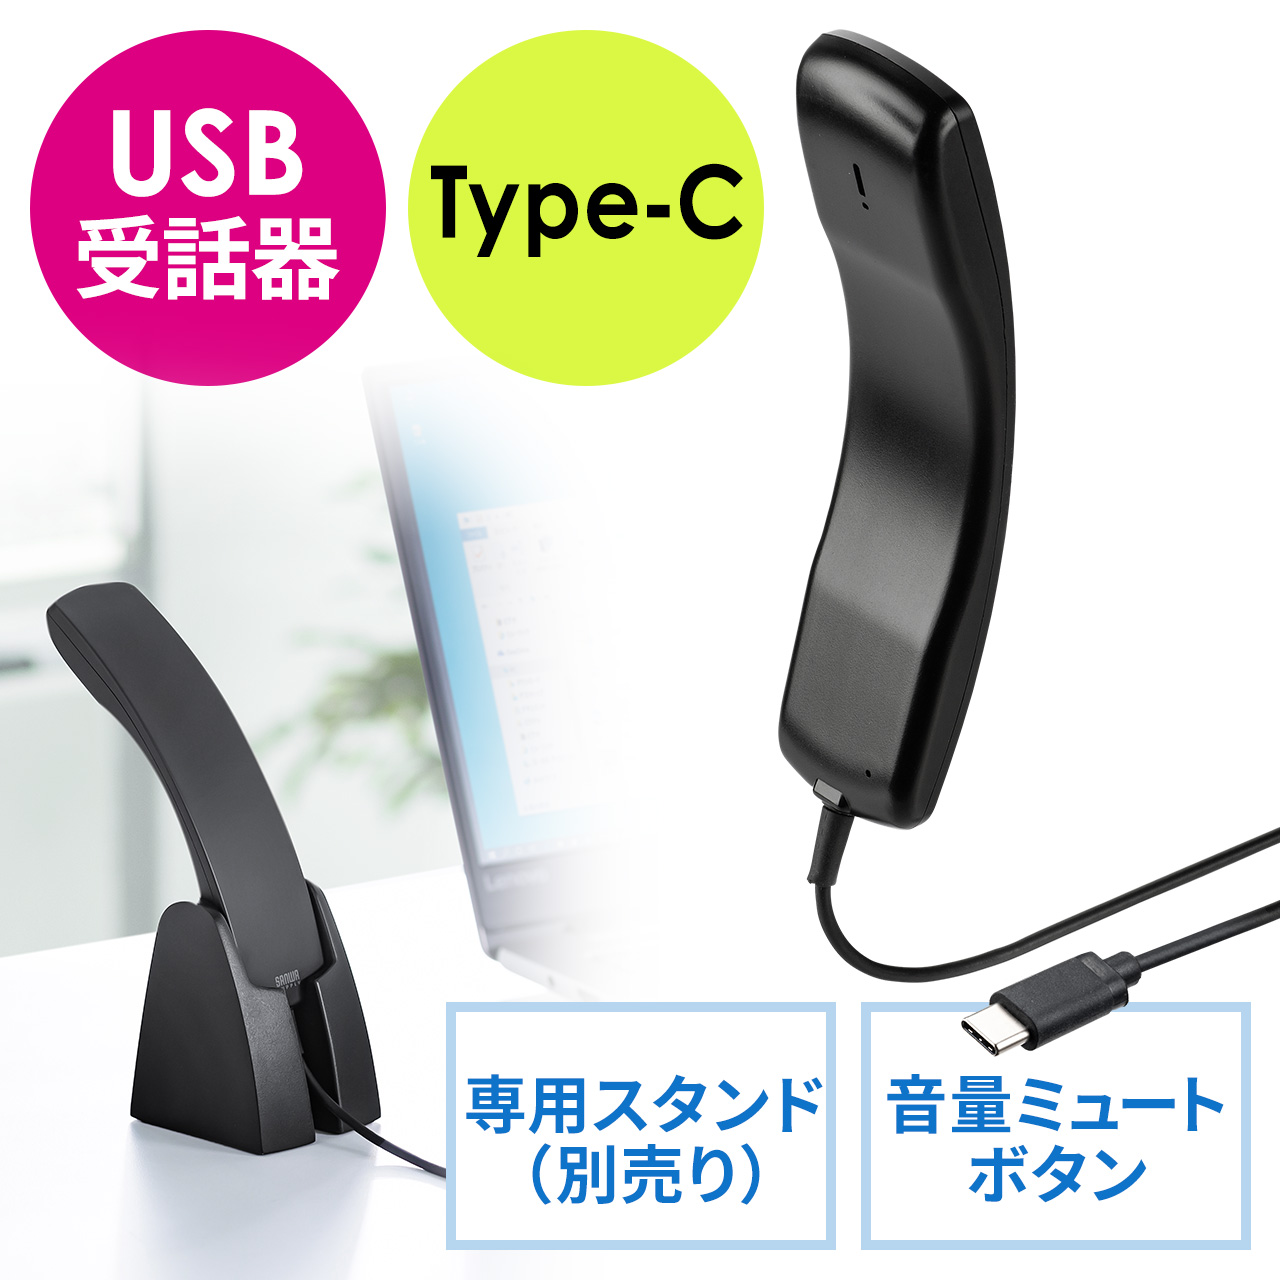 USBハンドセット USB受話器 Type-C 音量調節 マイクミュート可能 軽量